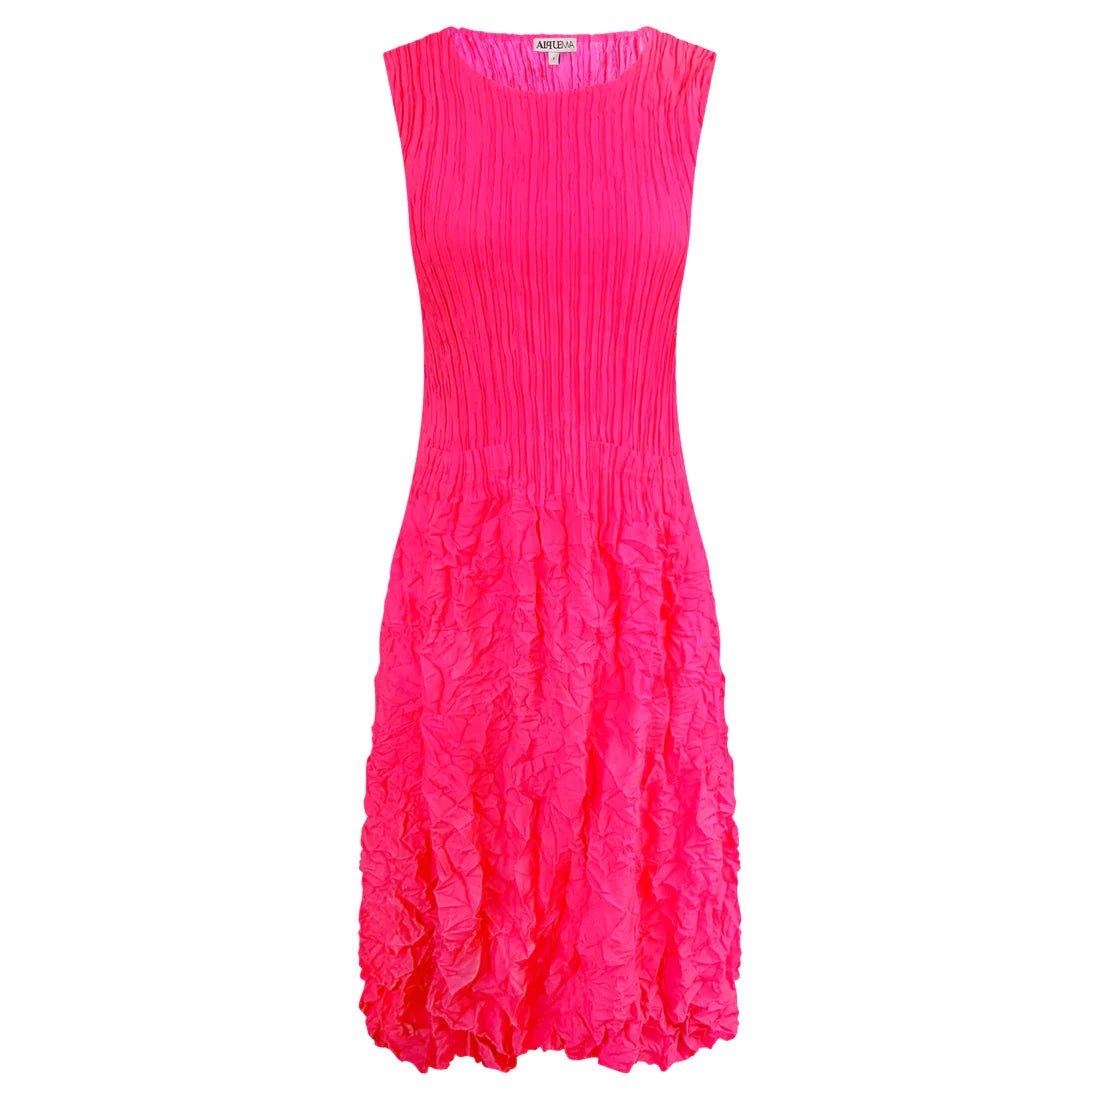 ALQUEMA - Smash Pocket Dress - Mars Pink - Alquema - Pinkhill - darwin fashion - darwin boutique